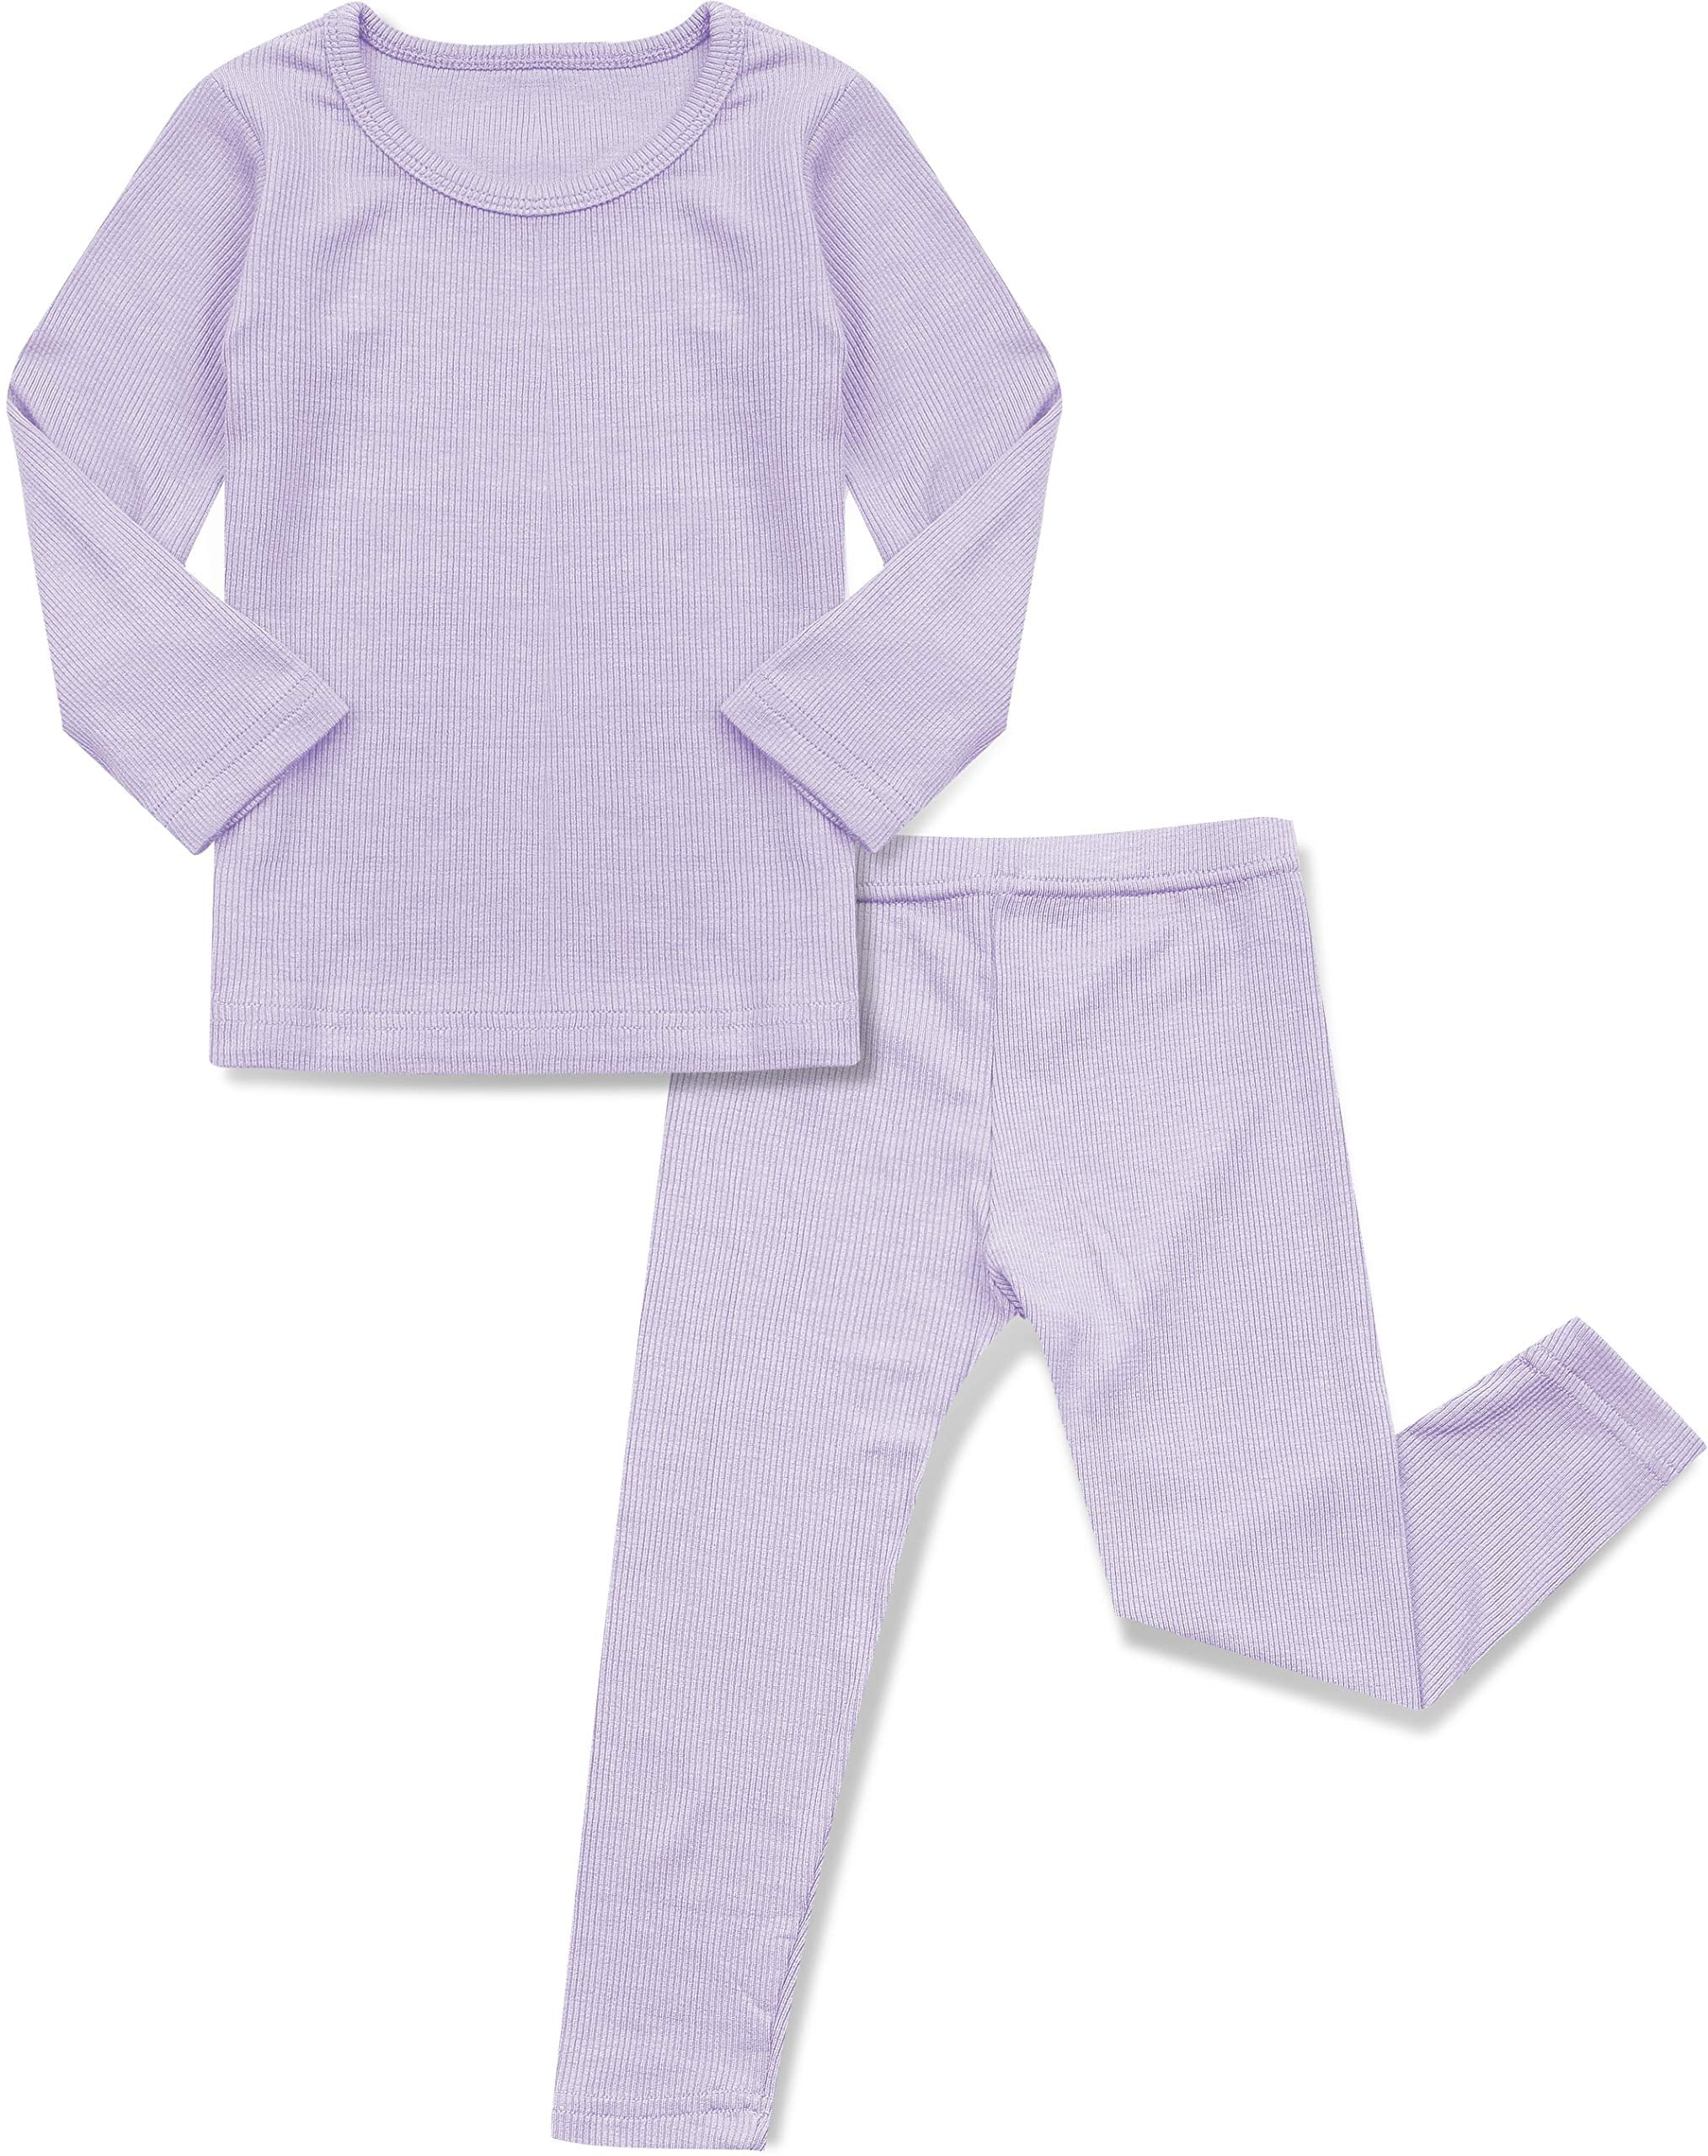 Avauma Baby Boys Girls Pajama Set Kids Toddler Snug Fit Ribbed Rayon Sleepwear Pjs For Daily And Halloween Costume L Light Purple X Small 6 12 Month Walmart Com Walmart Com